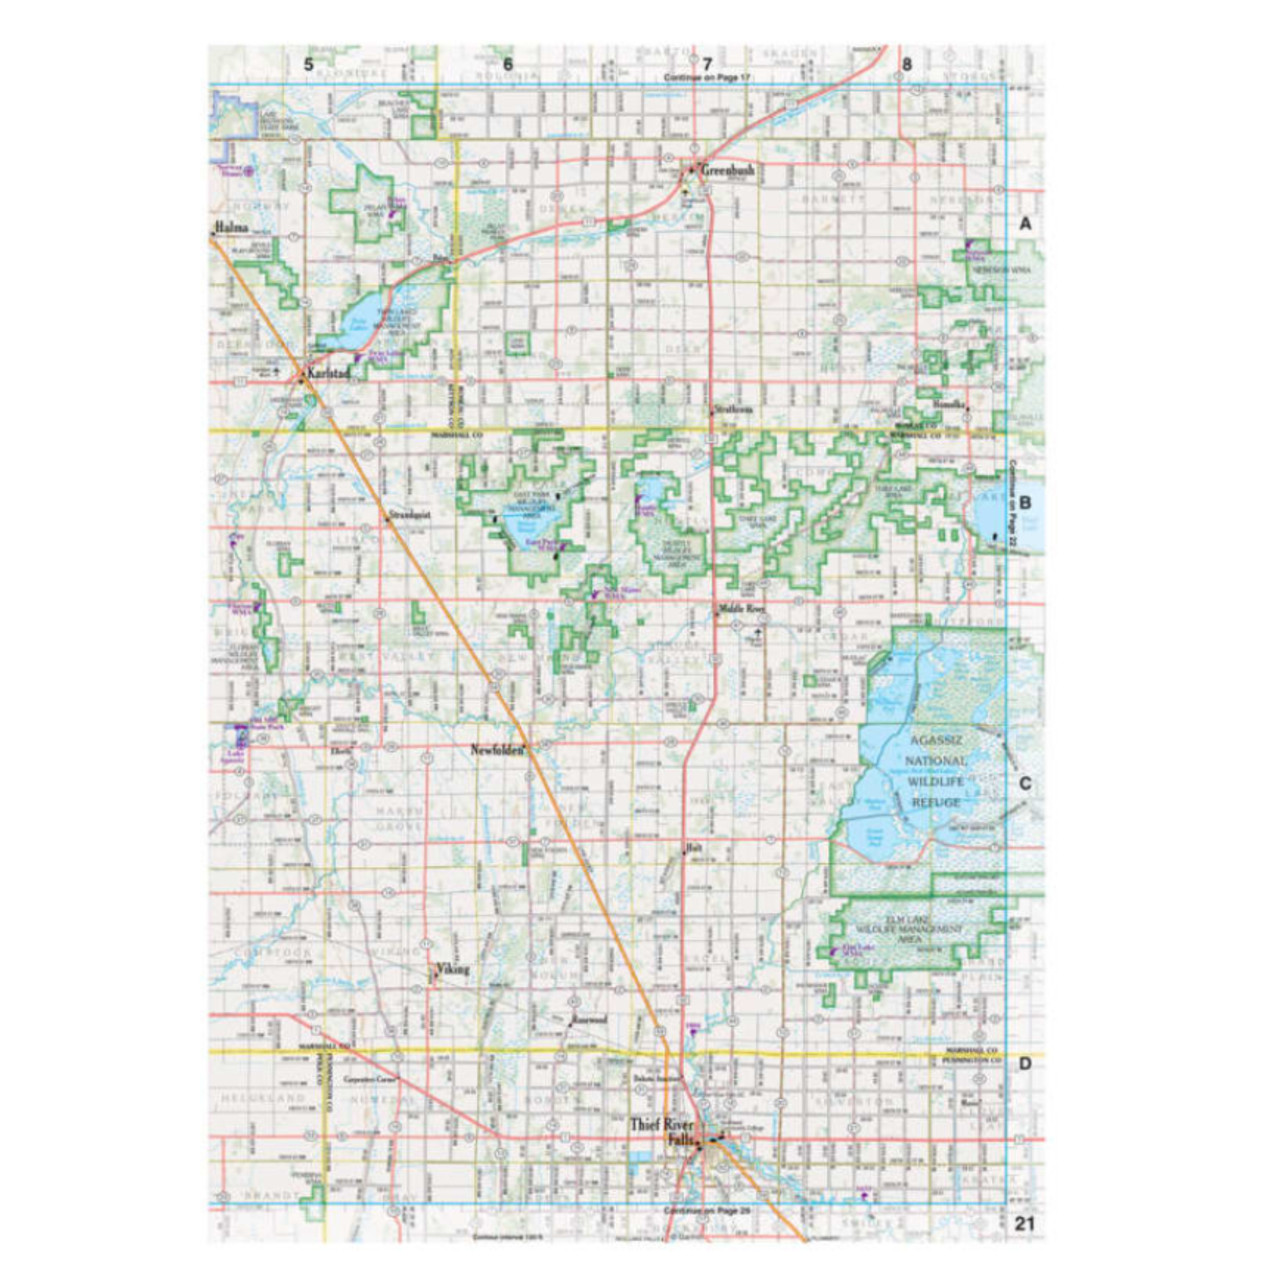 Garmin New OEM DeLorme® Atlas & Gazetteer Paper Maps Minnesota, 010-12958-00